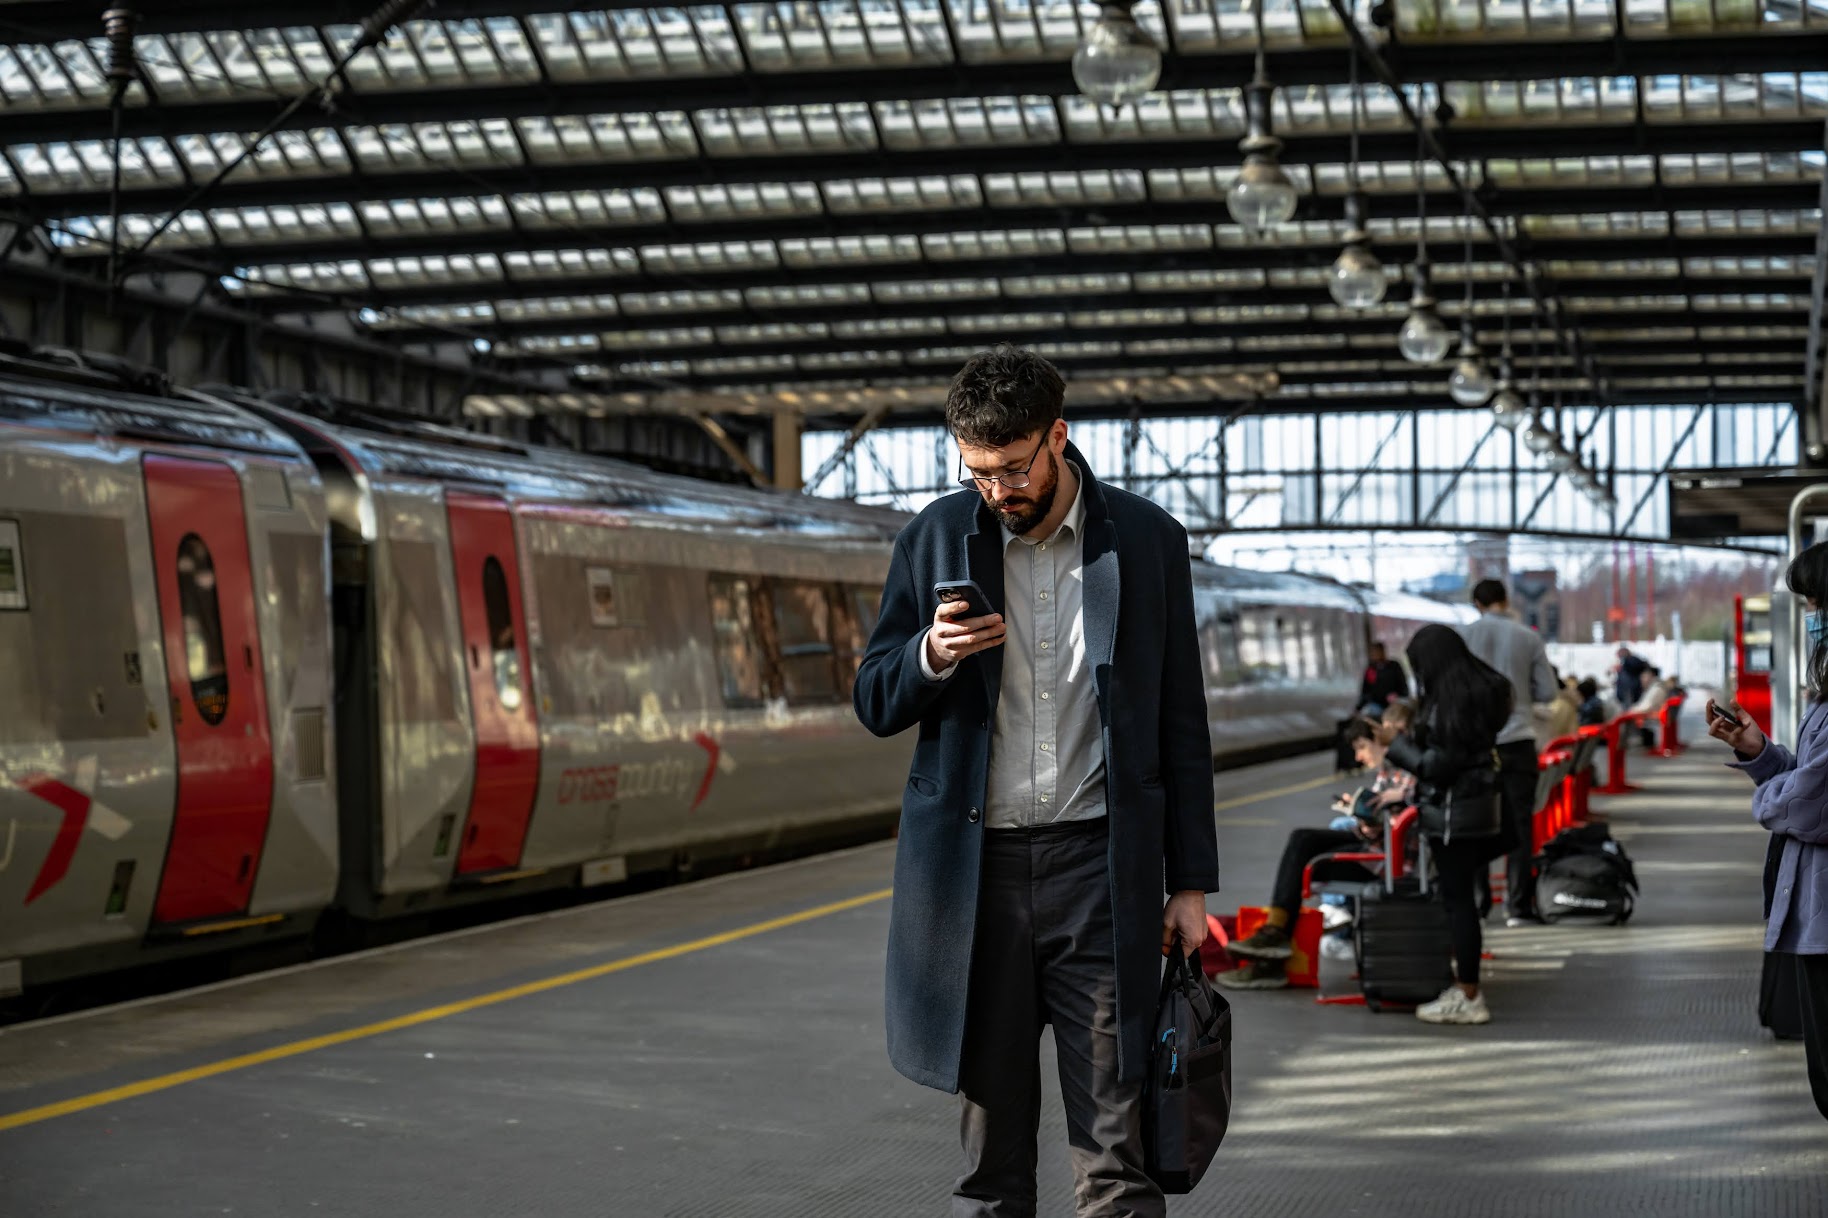 Man checks phone on train platform